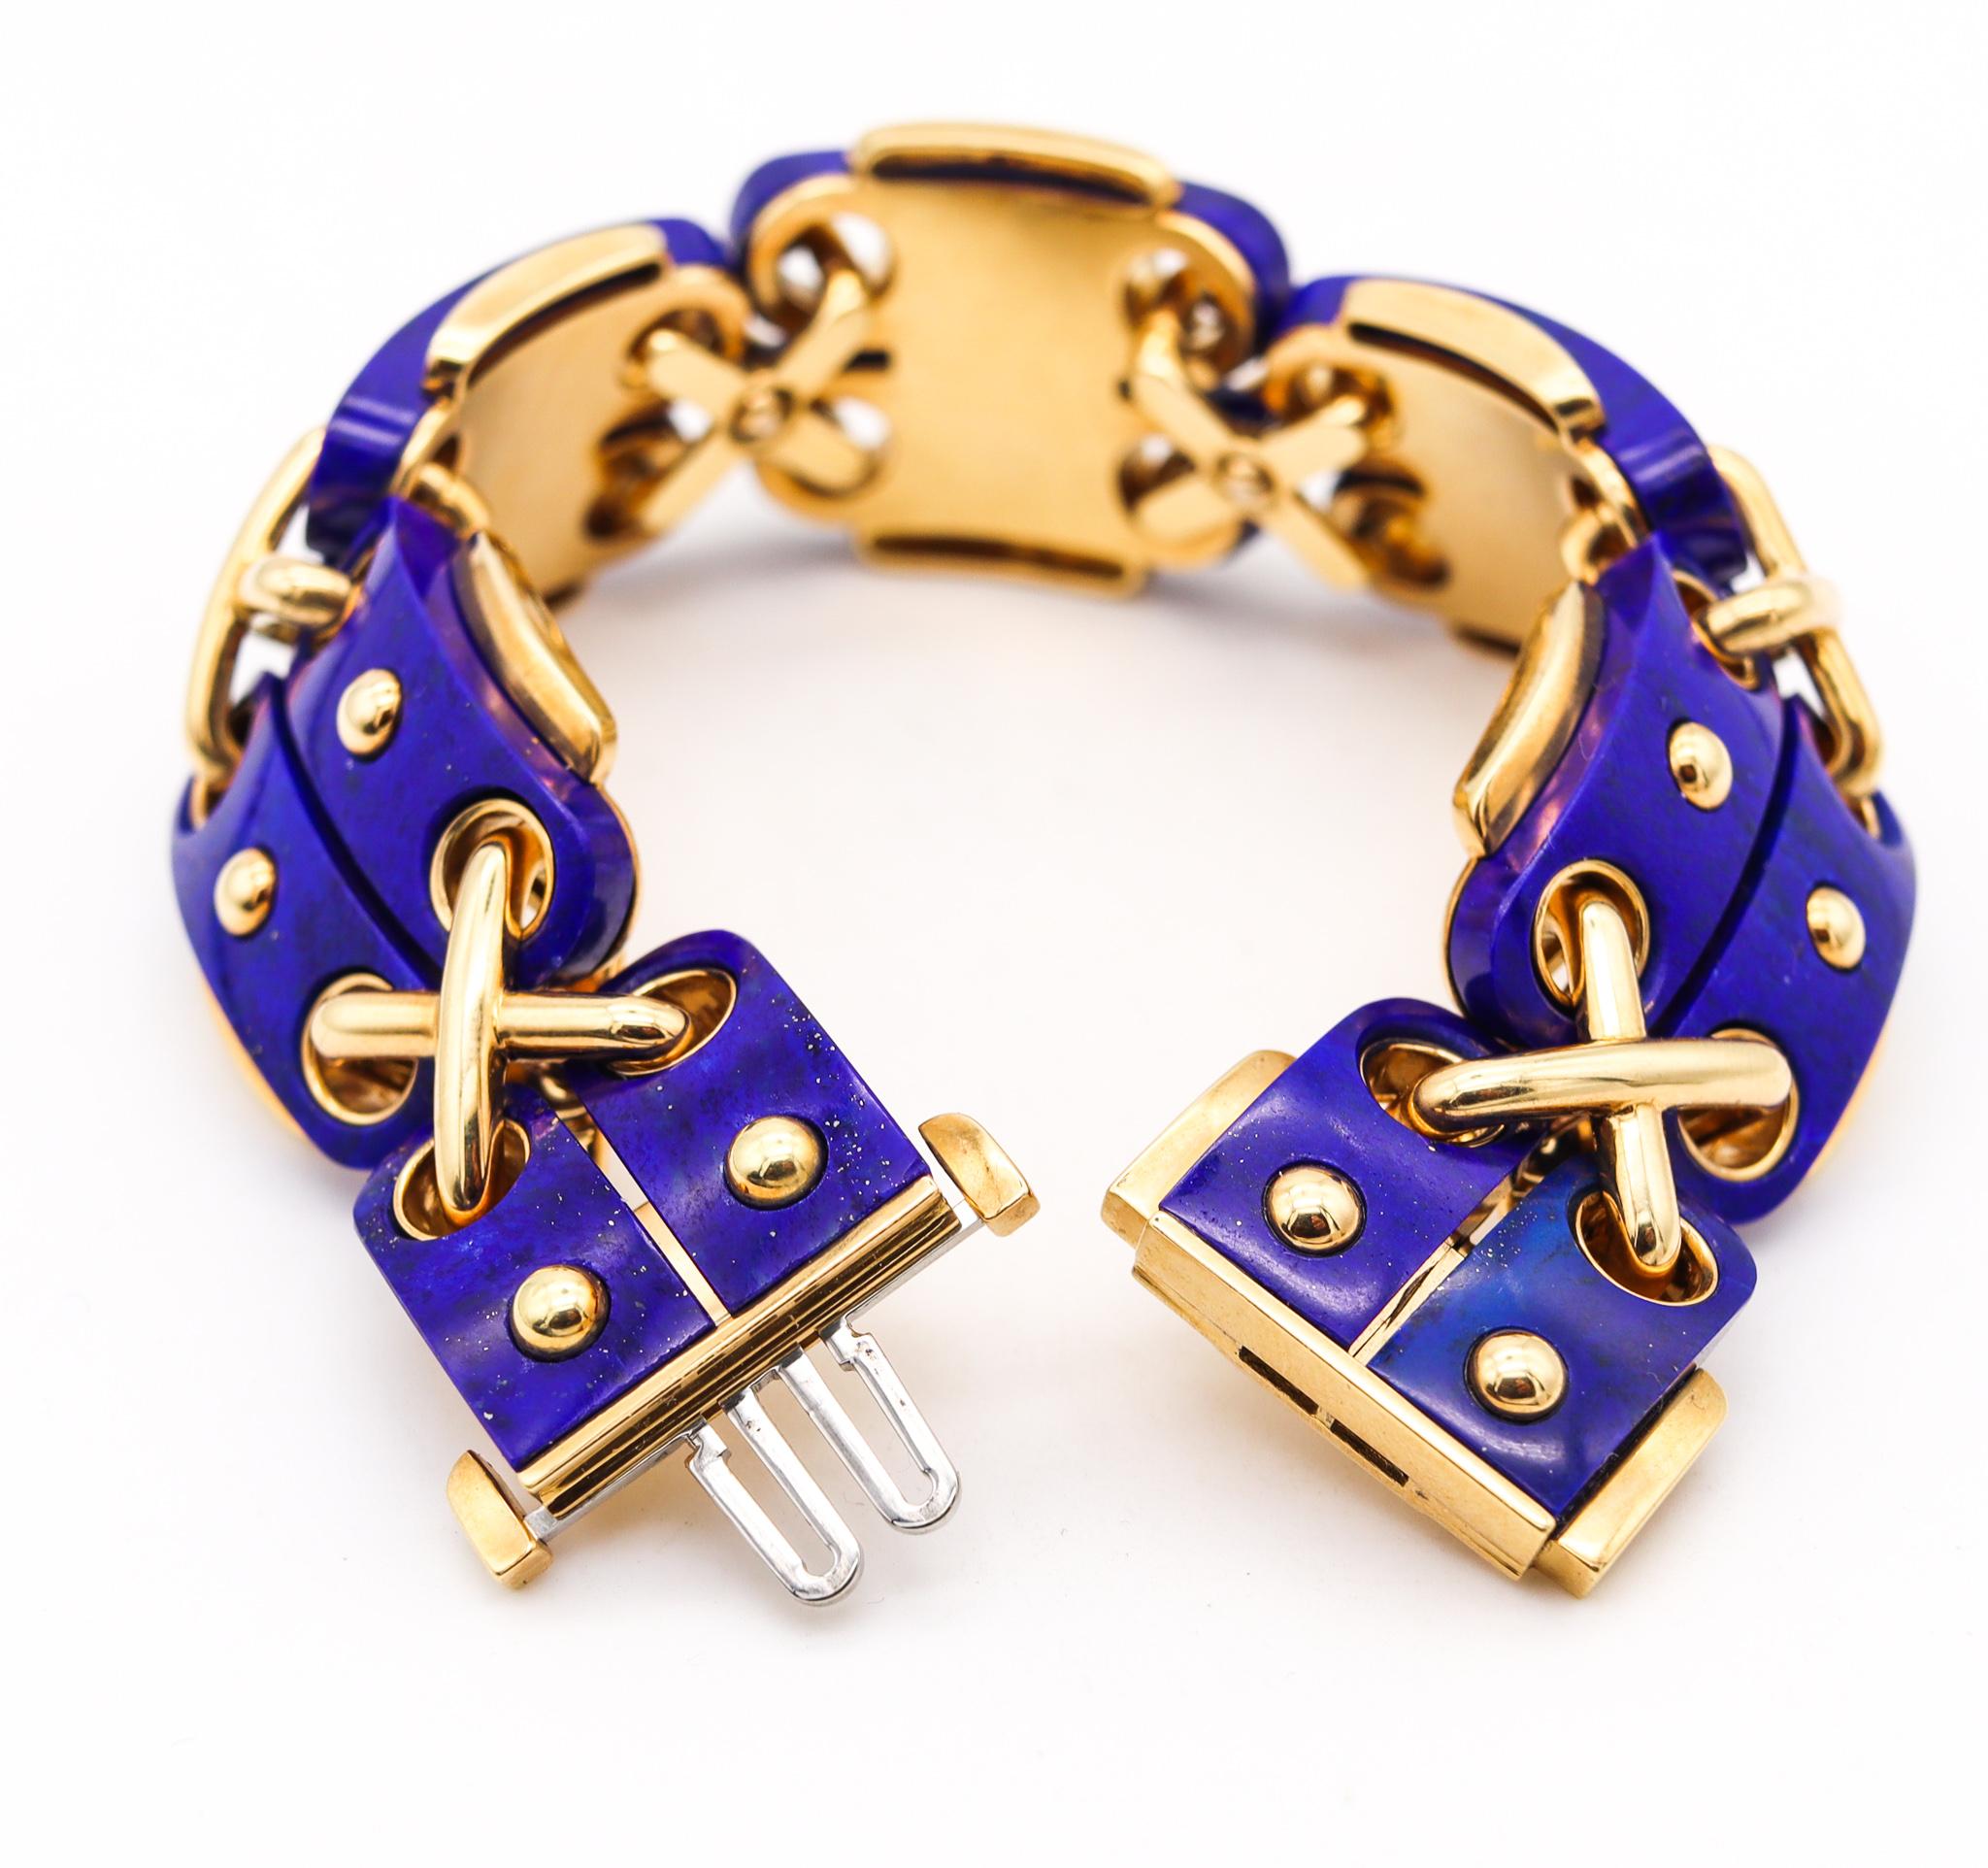 Modernist David Webb 1970 Aldo Cipullo Geometric Bracelet in 18Kt Gold with Lapis Lazuli